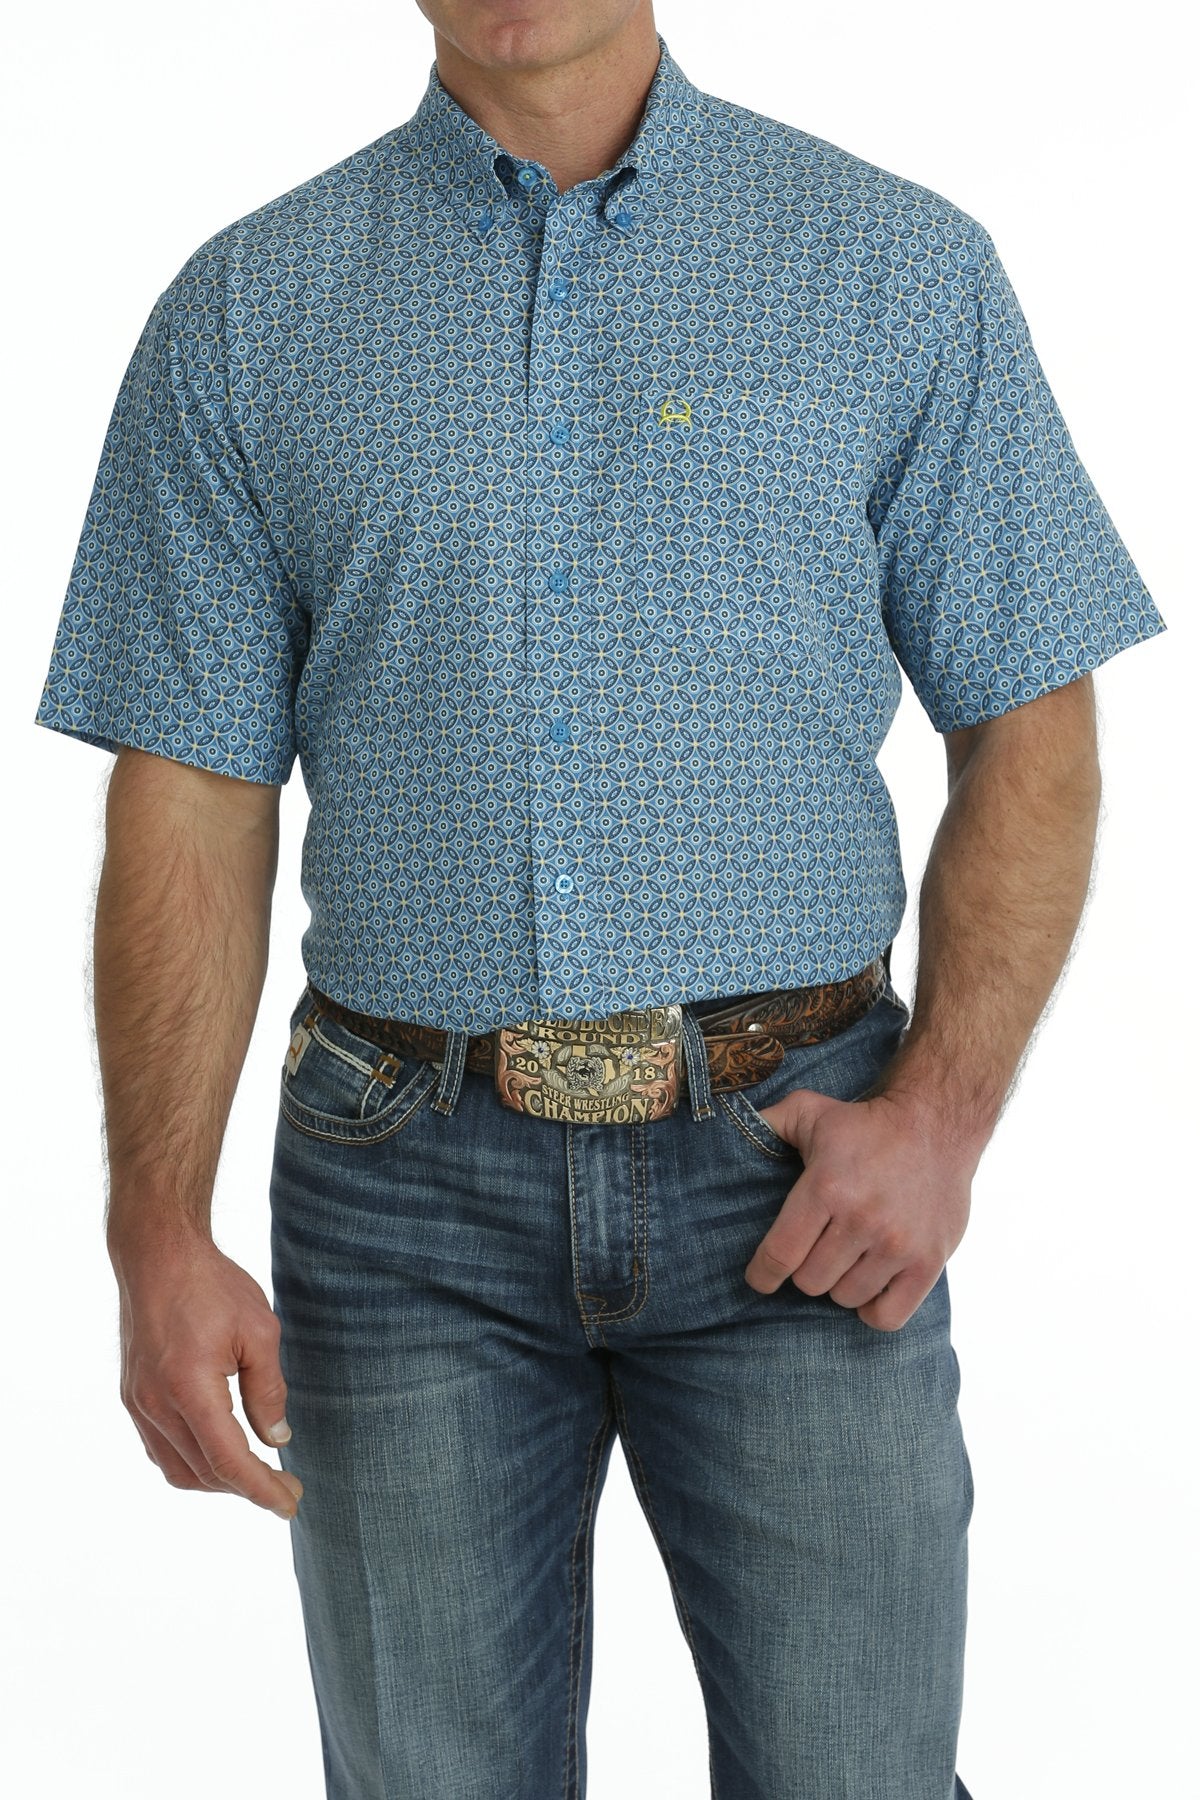 Cinch Men's Blue Geometric Print Short Sleeve ArenaFlex Shirt